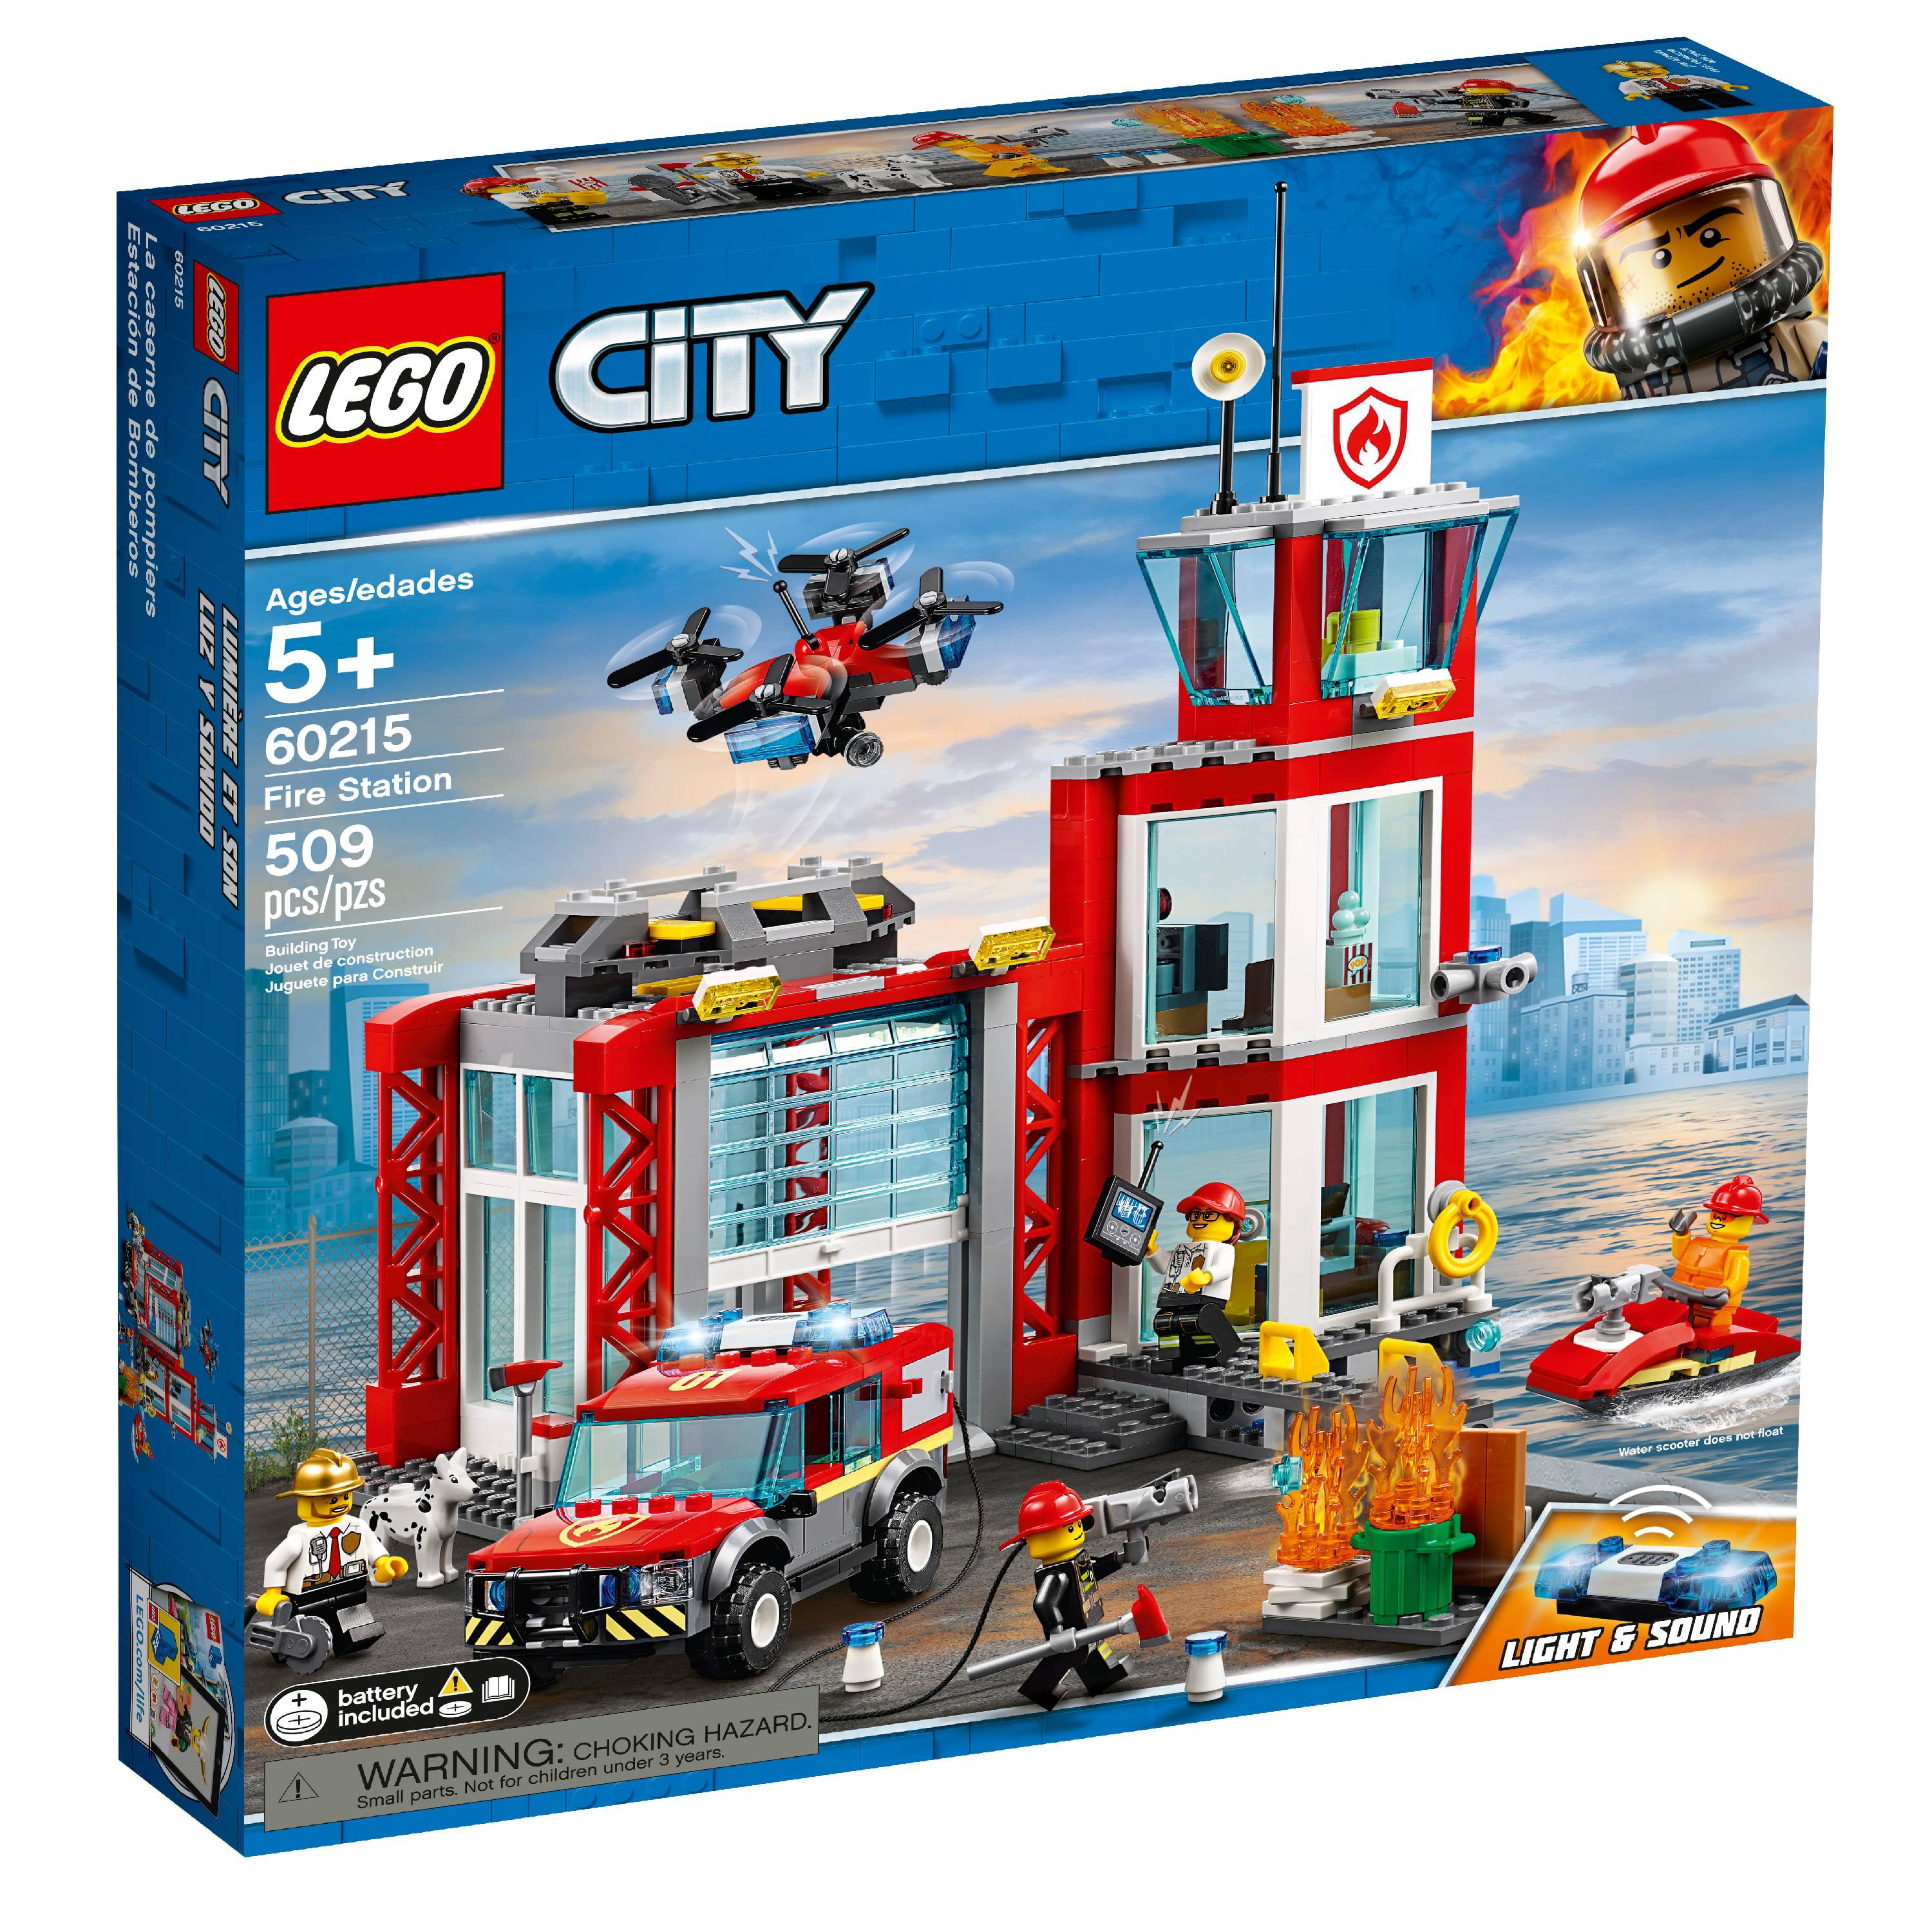 LEGO City Fire 60215 Set (509 Pieces) -